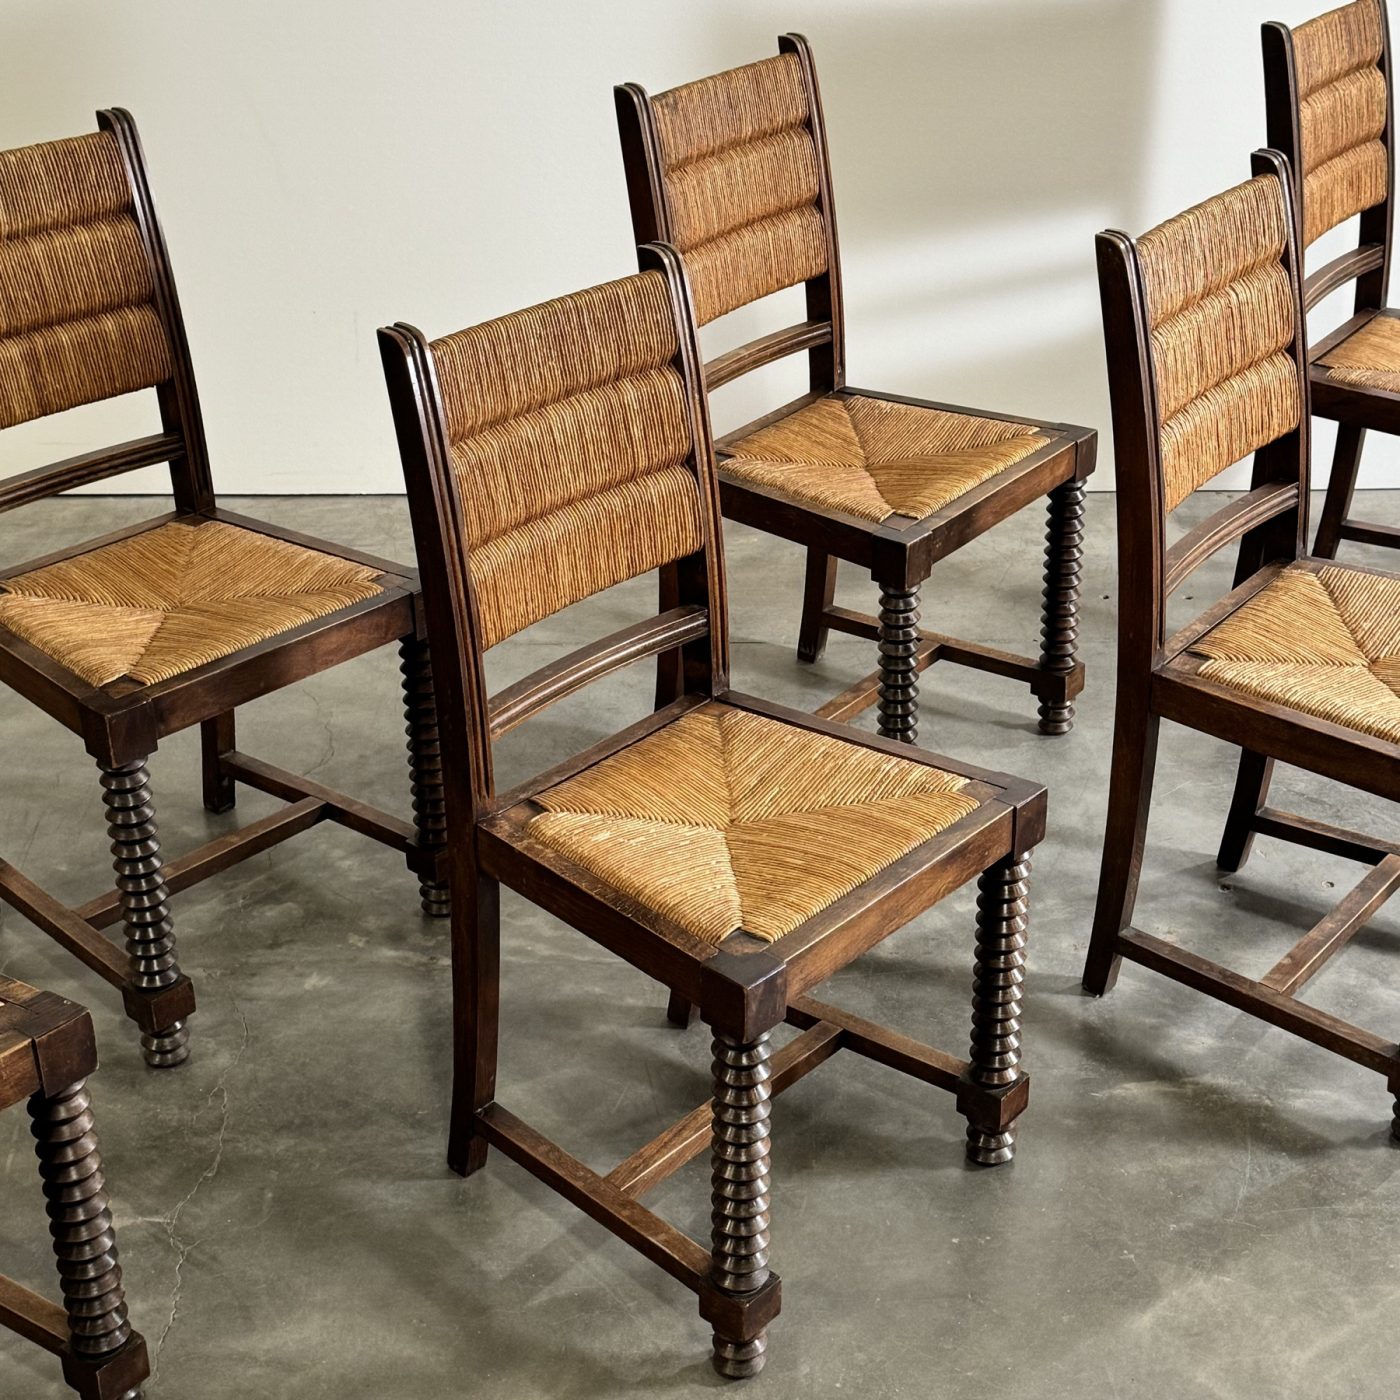 objet-vagabond-midcentury-chairs0009